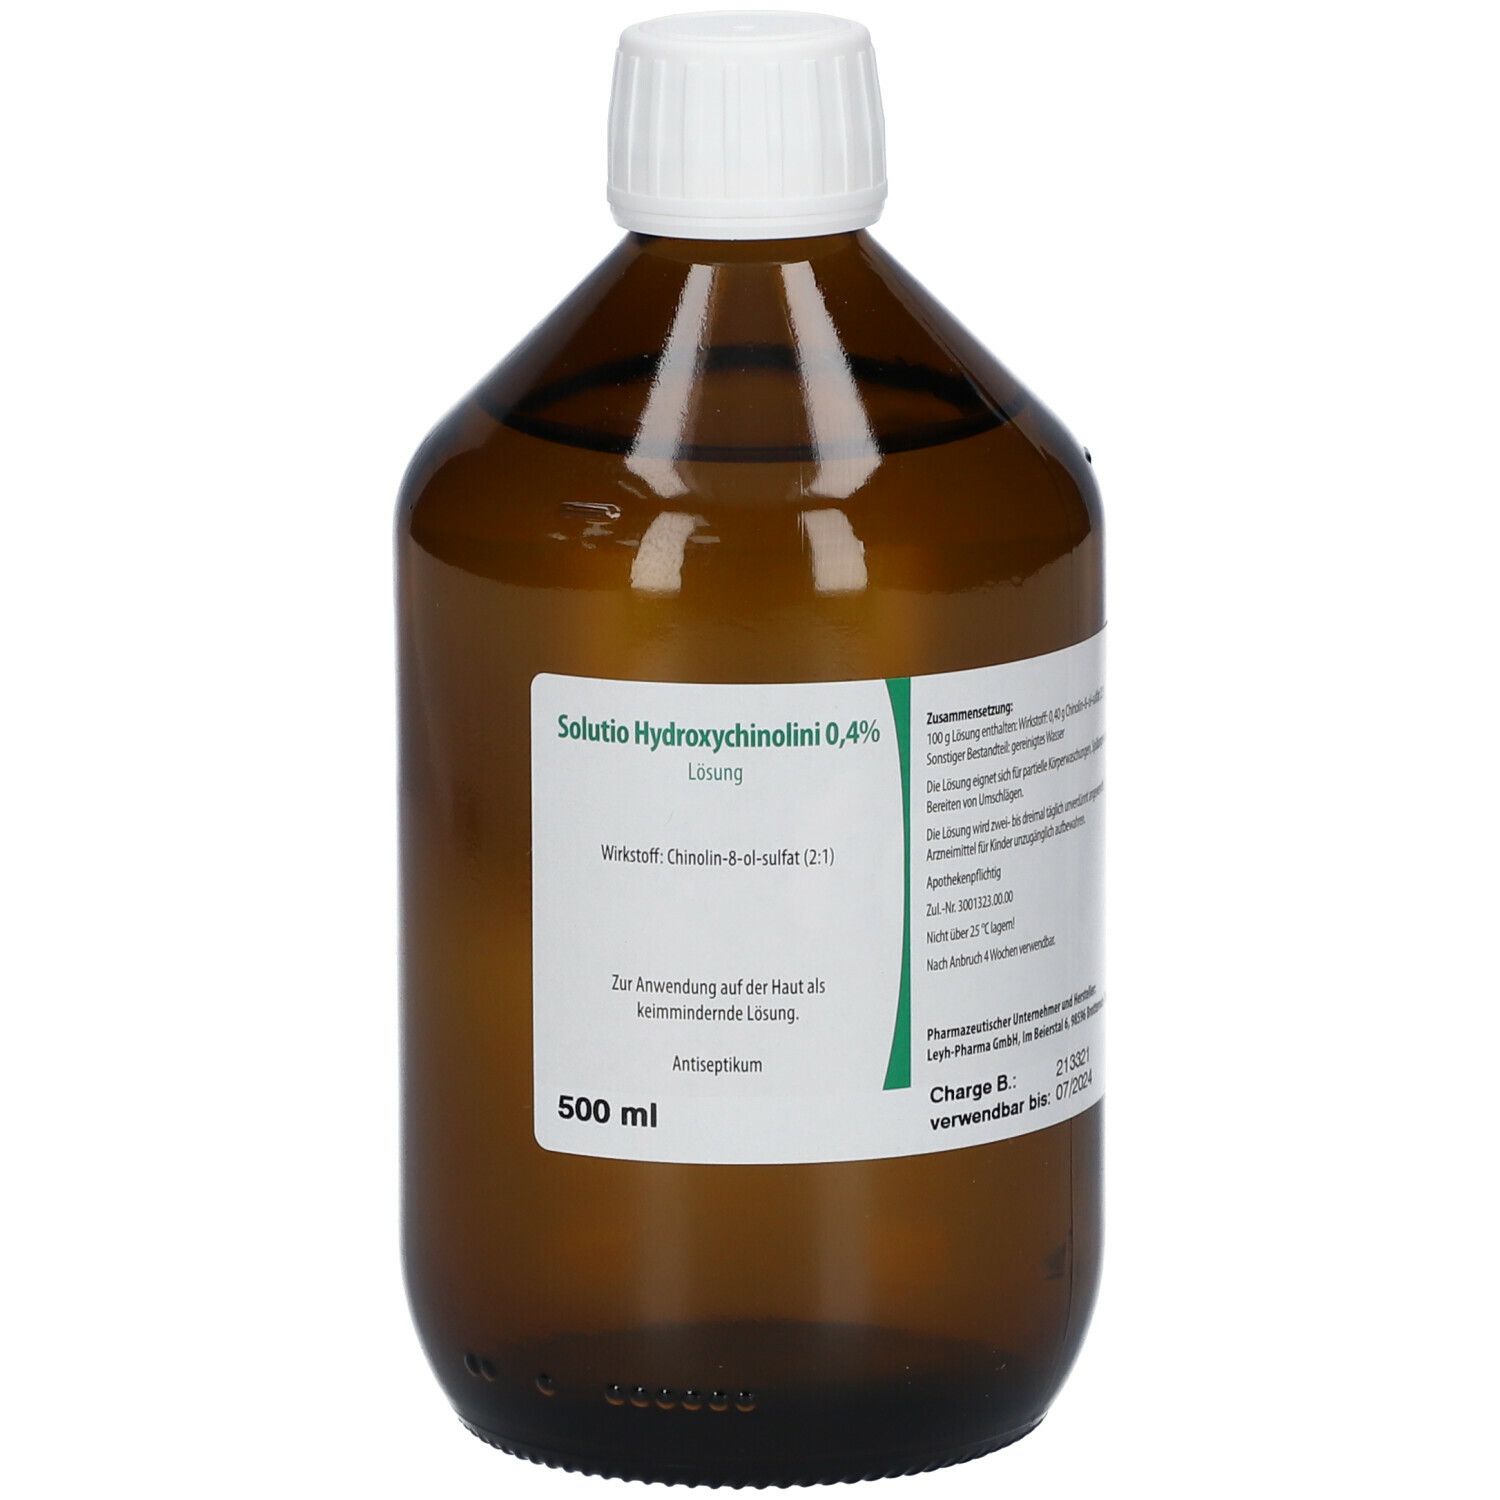 Solutio Hydroxychinolini 0,4%